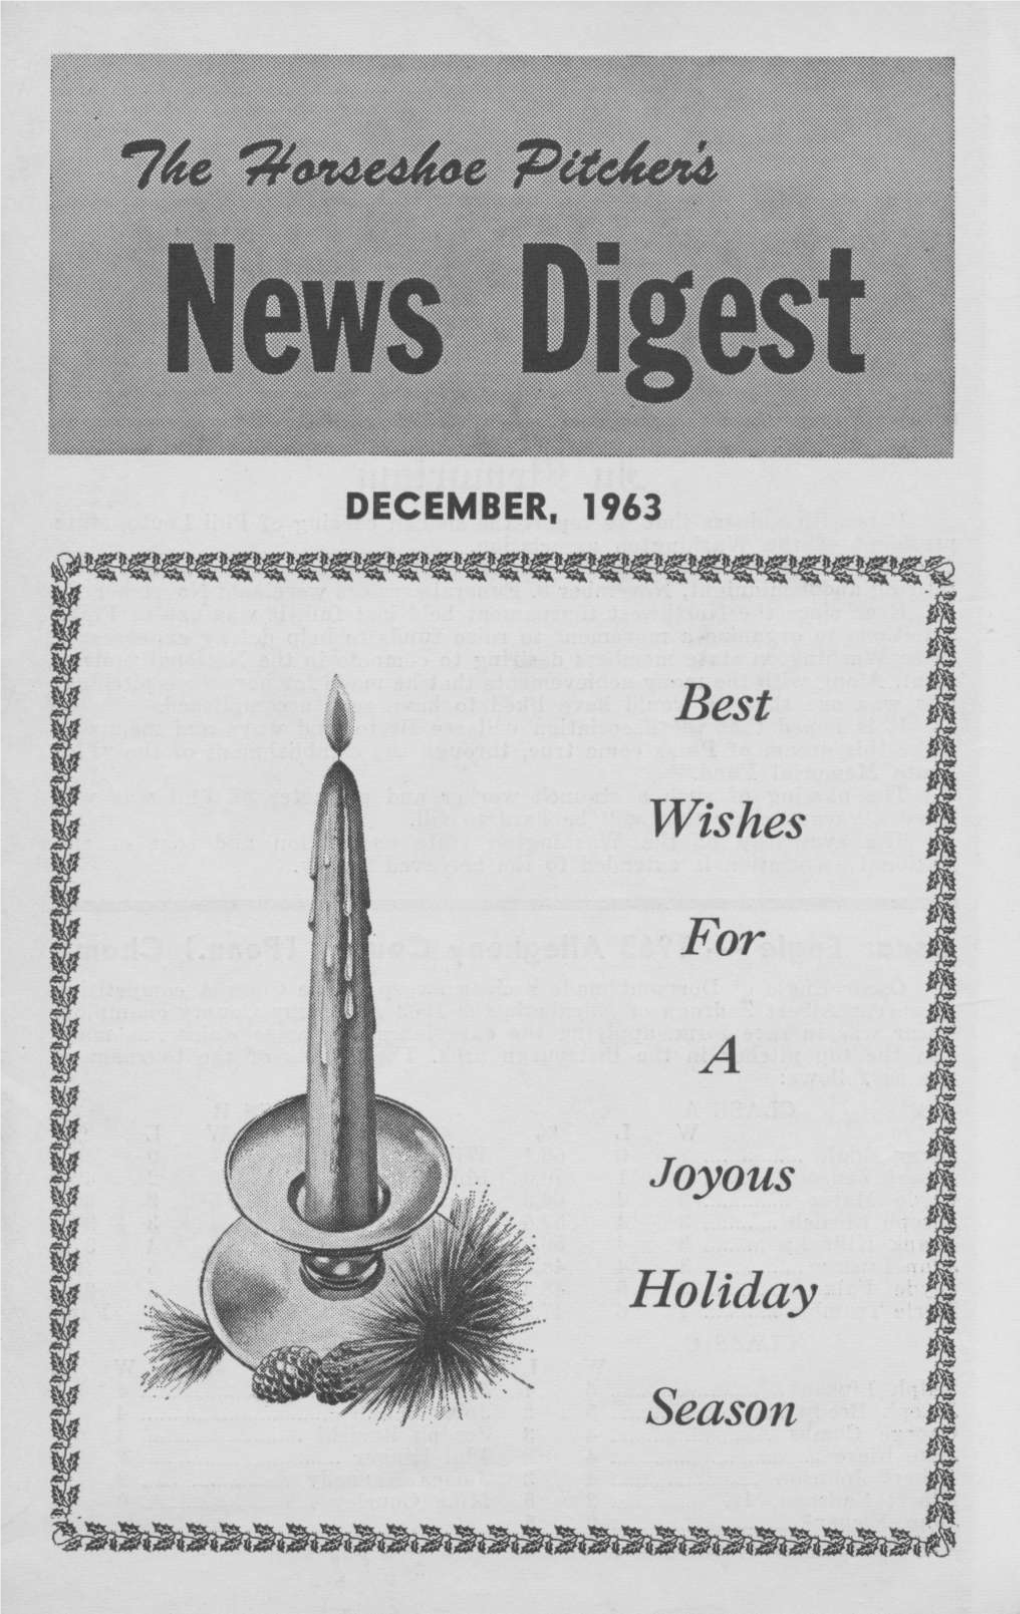 December, 1963 2 the Horseshoe Pitcher's News Digest